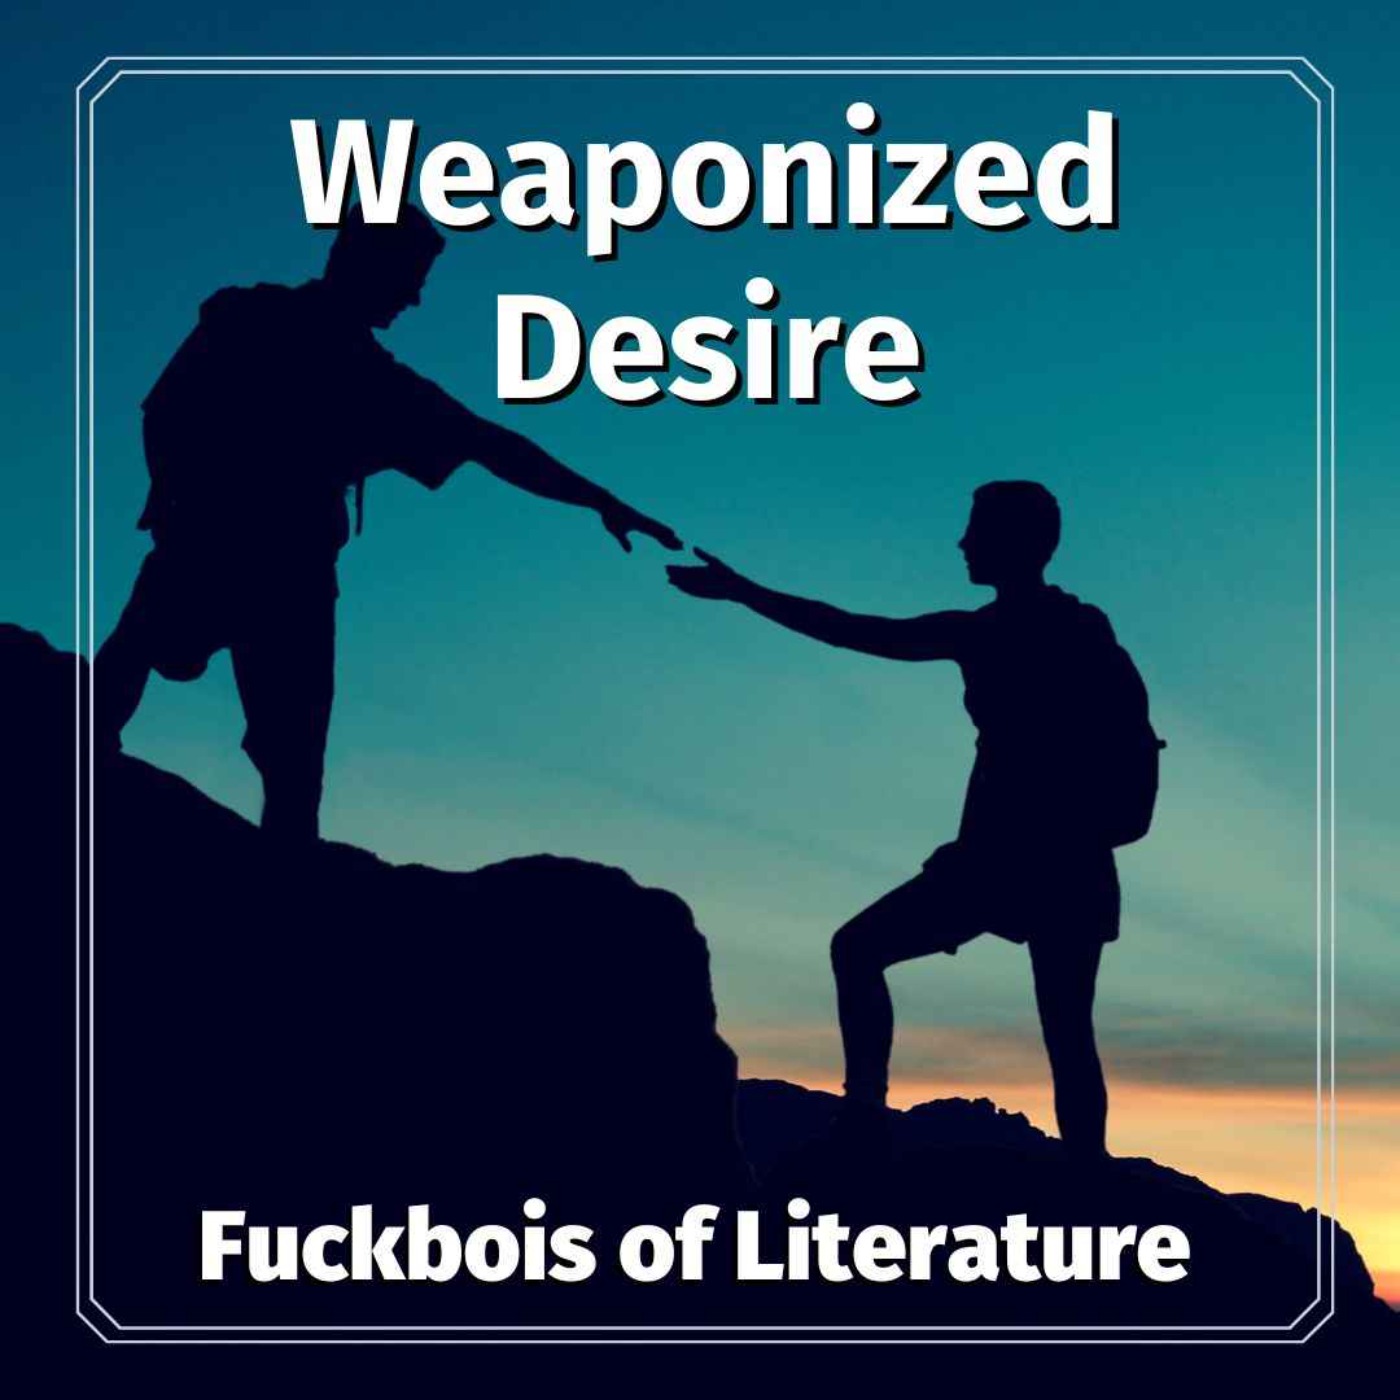 1: Weaponized Desire